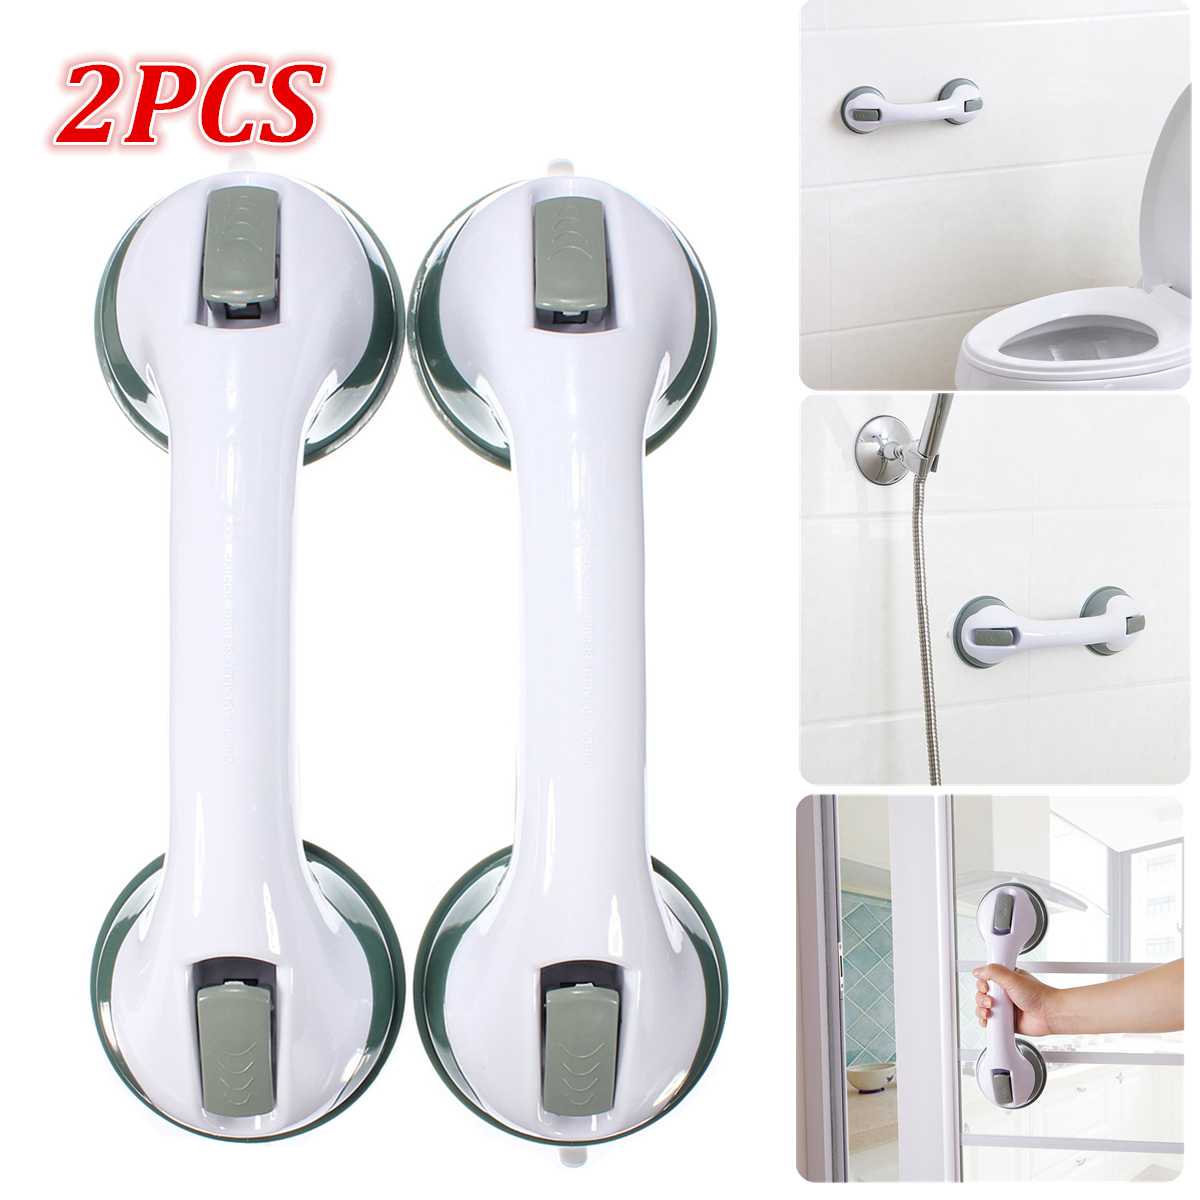 Suction Shower Grab Bars Bathroom Safety (2 PCS)